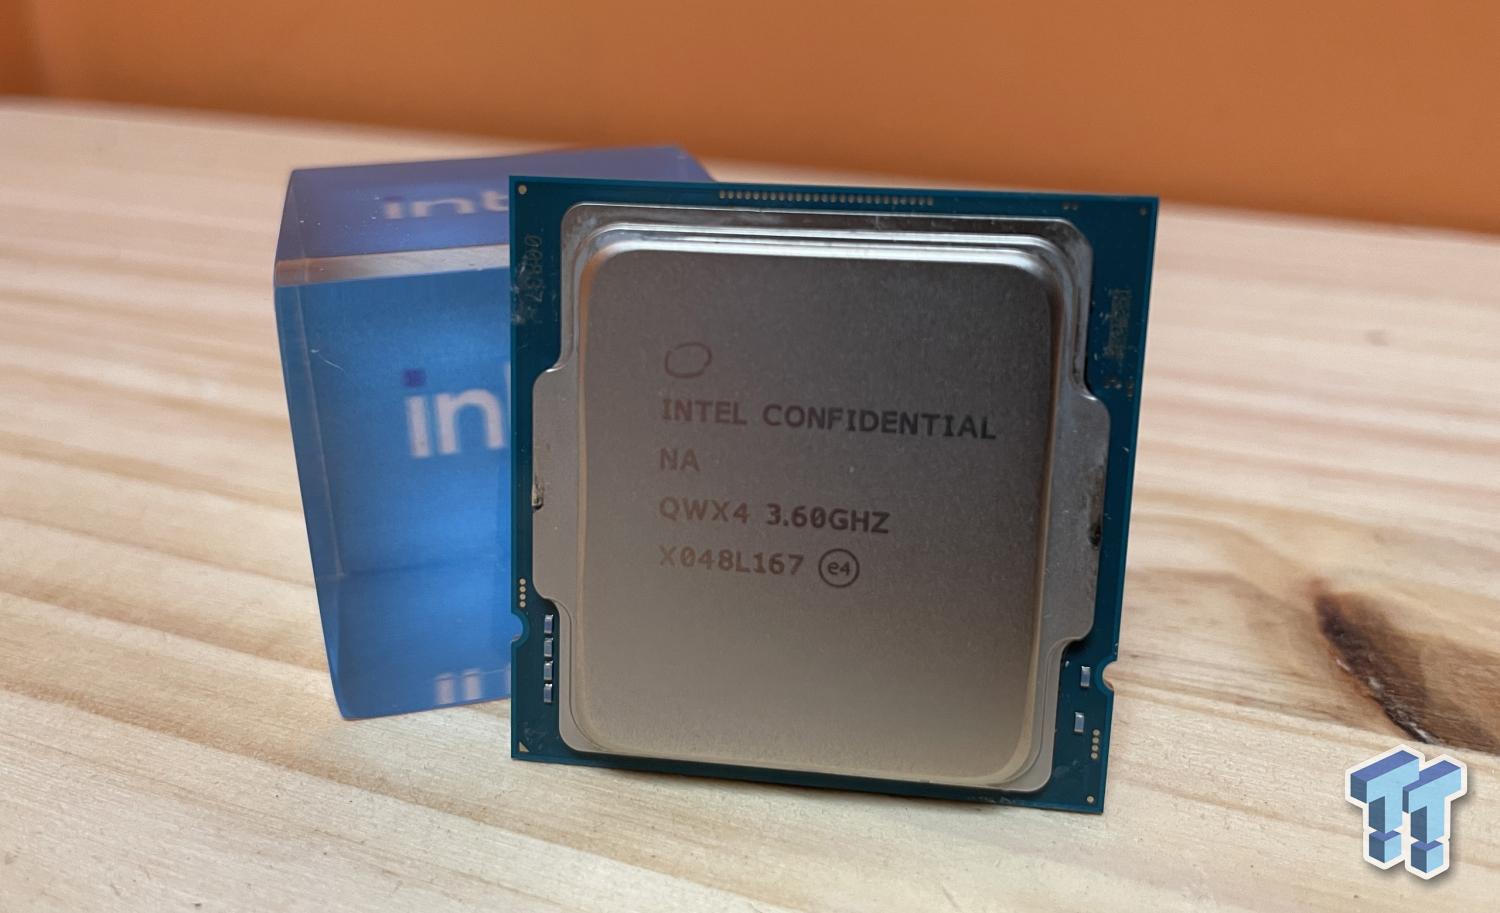 Intel Core i7-11700K 3.6 GHz Eight-Core LGA 1200 BX8070811700K